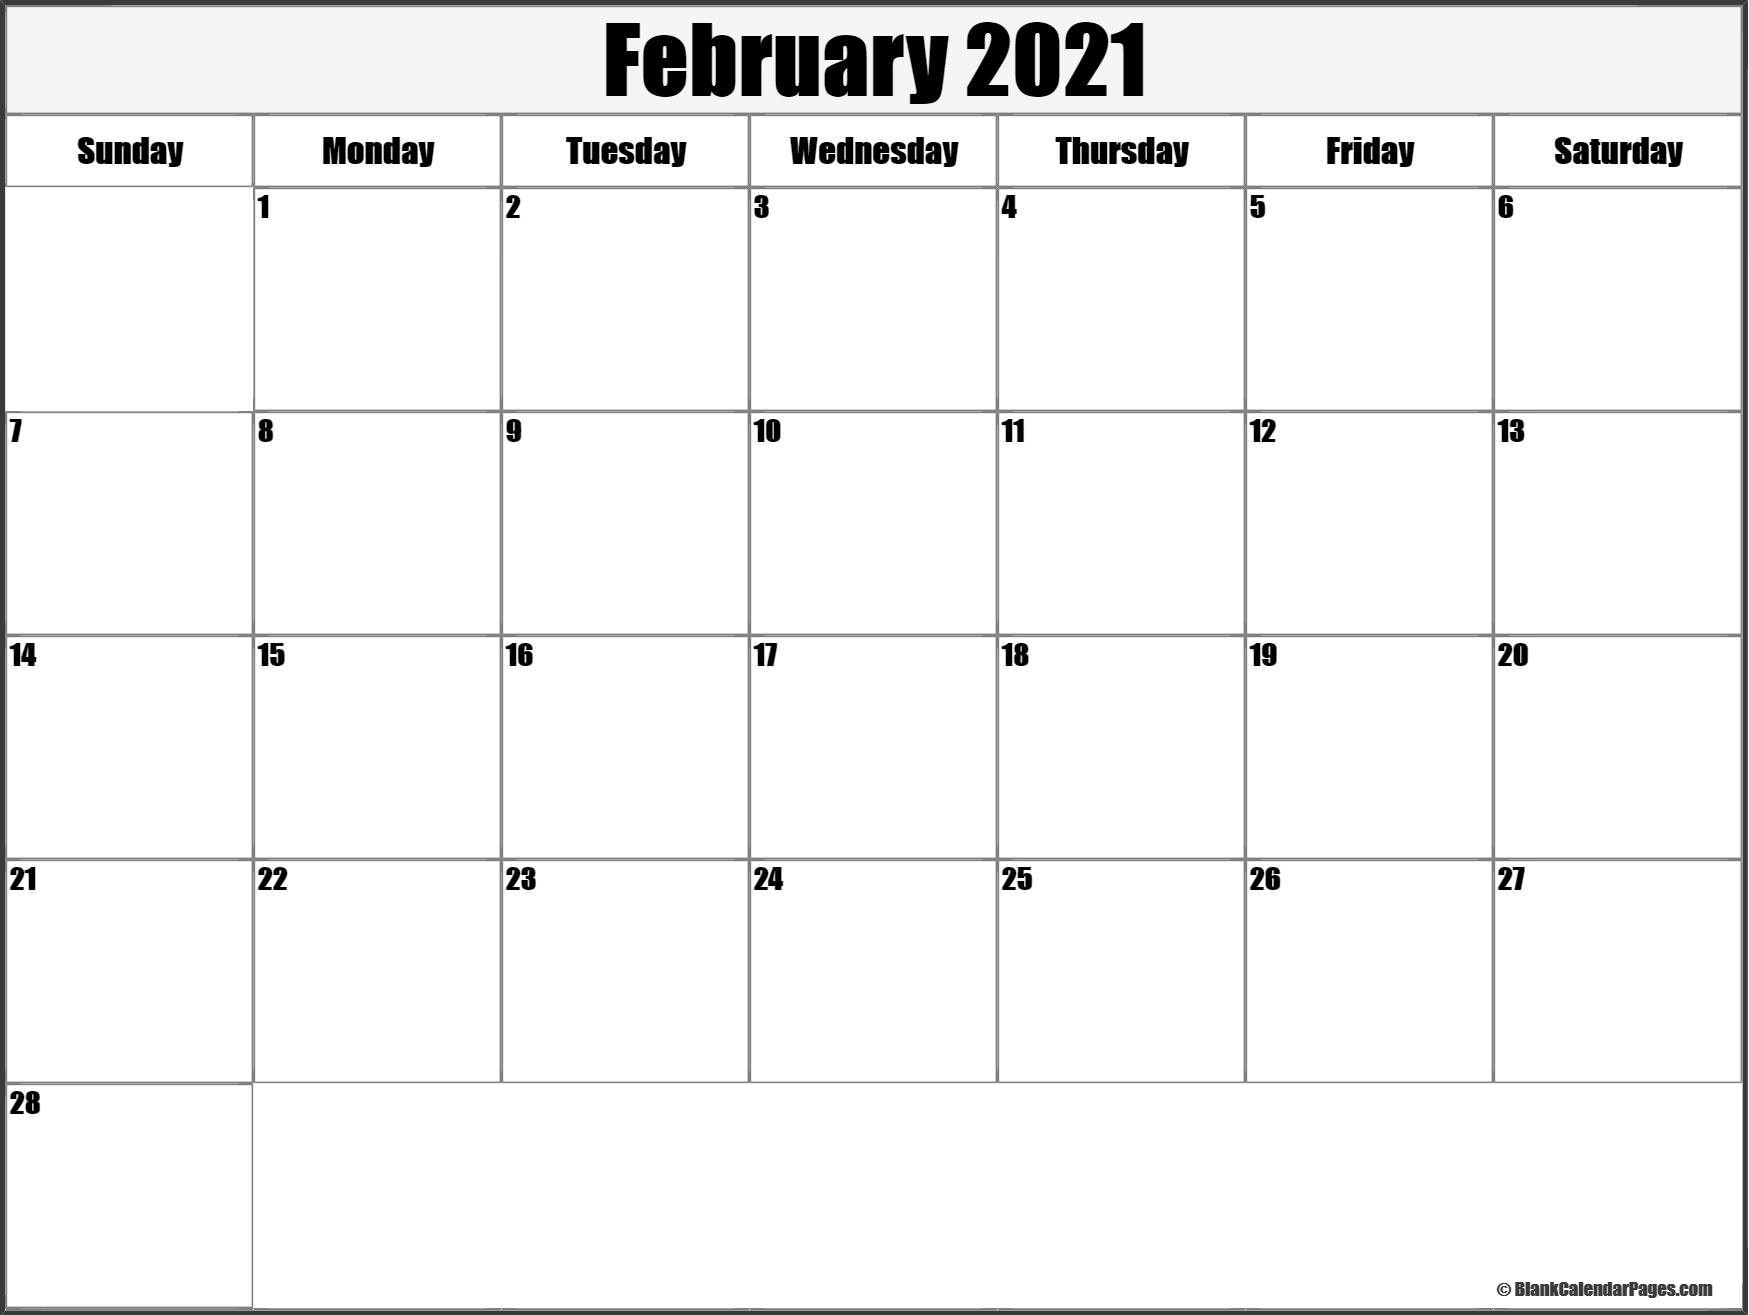 February 2021 Blank Calendar Collection.-Free Printable Bill Calendar 2021